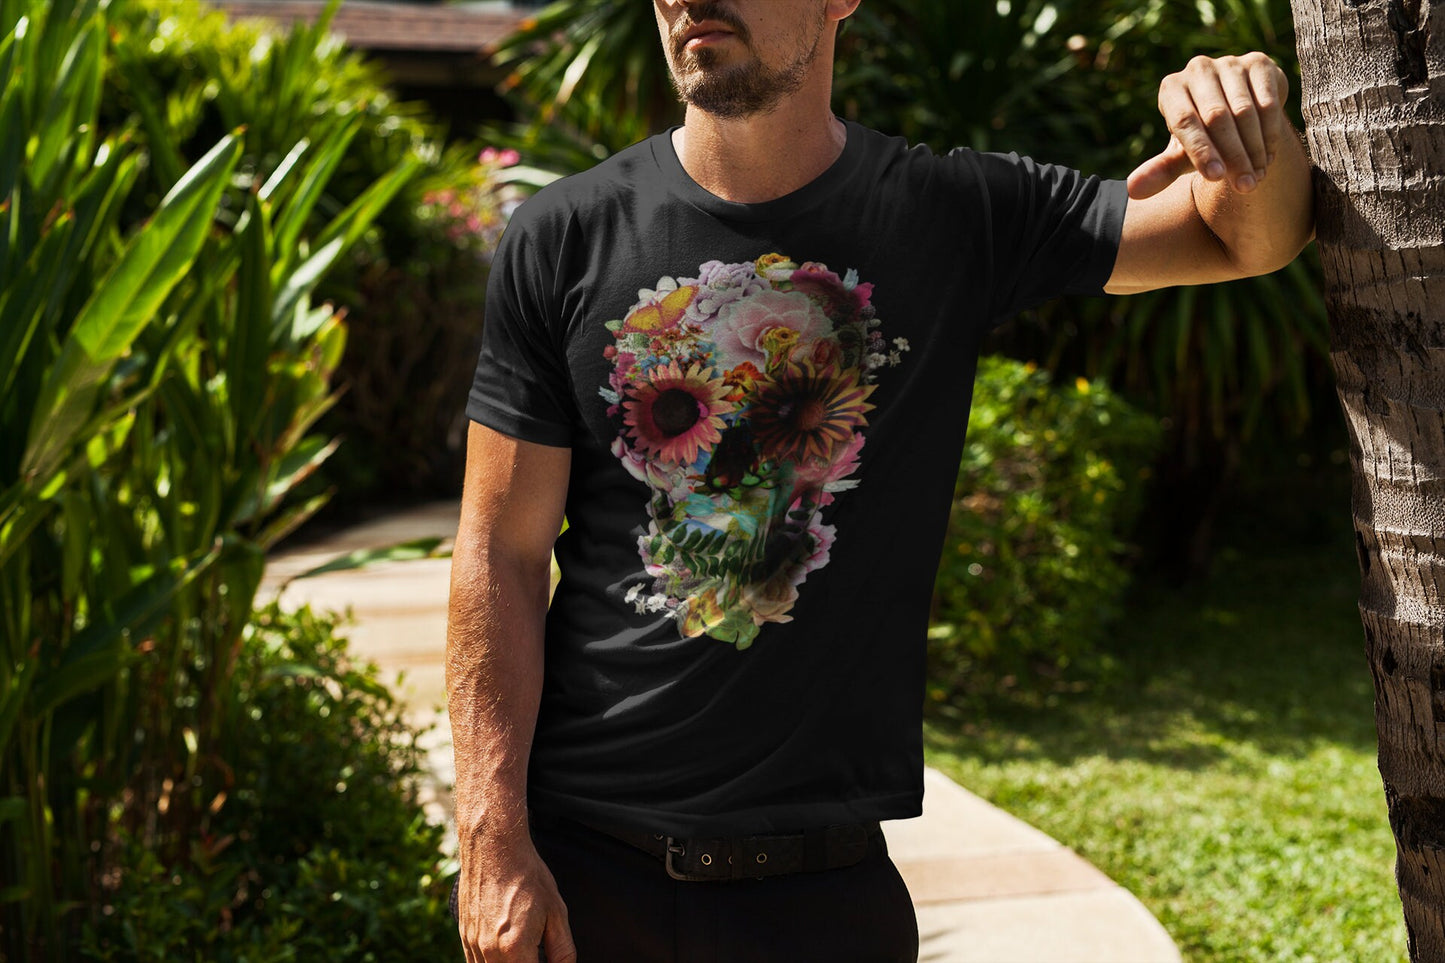 Floral Skull Men's T-shirt, Skull Art Print T shirt, Skull Gift For Him, Boho Sugar Skull Illustration Graphic Tee